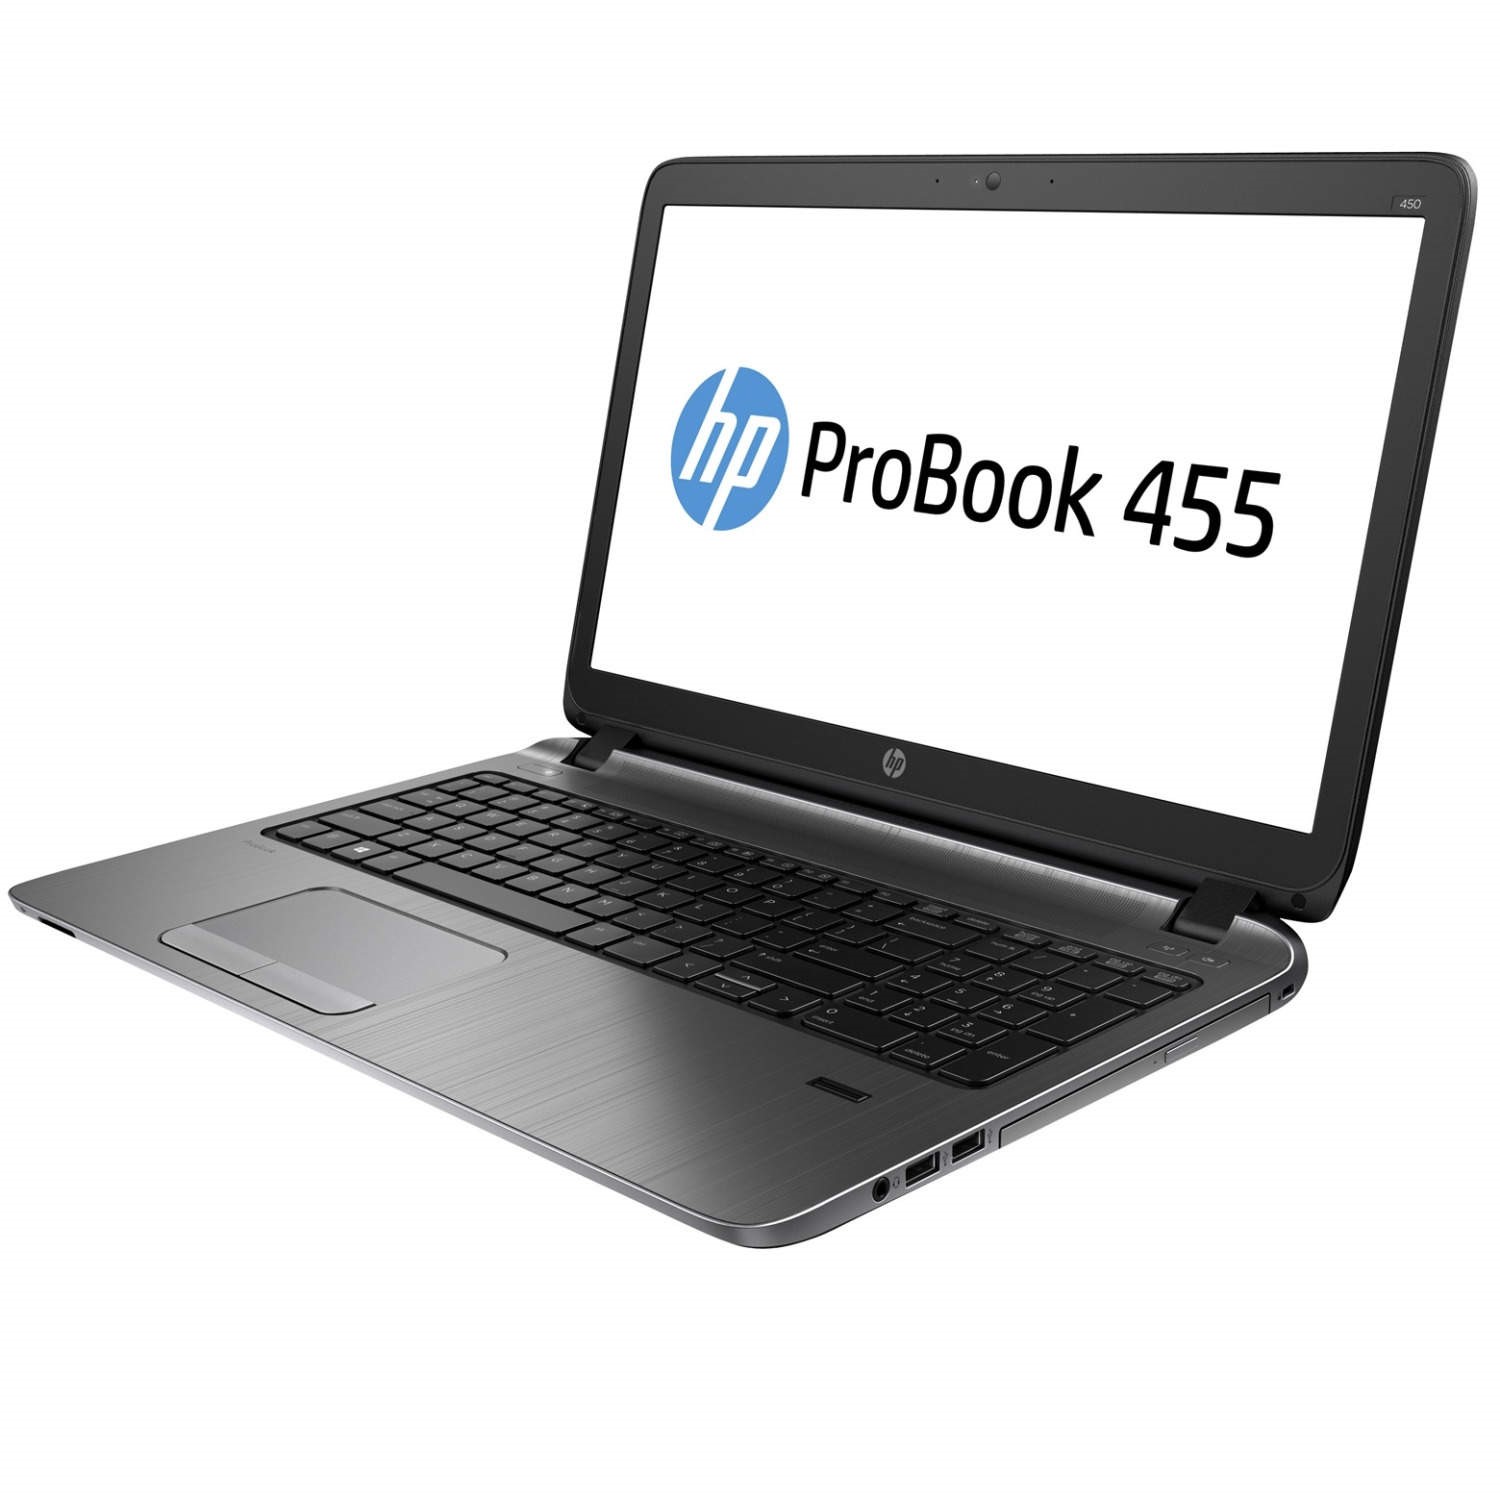 مشخصات، قیمت و خرید لپ تاپ HP ProBook 455 G2 AMD A8-7100 Radeon R5 BestLaptop4u.com